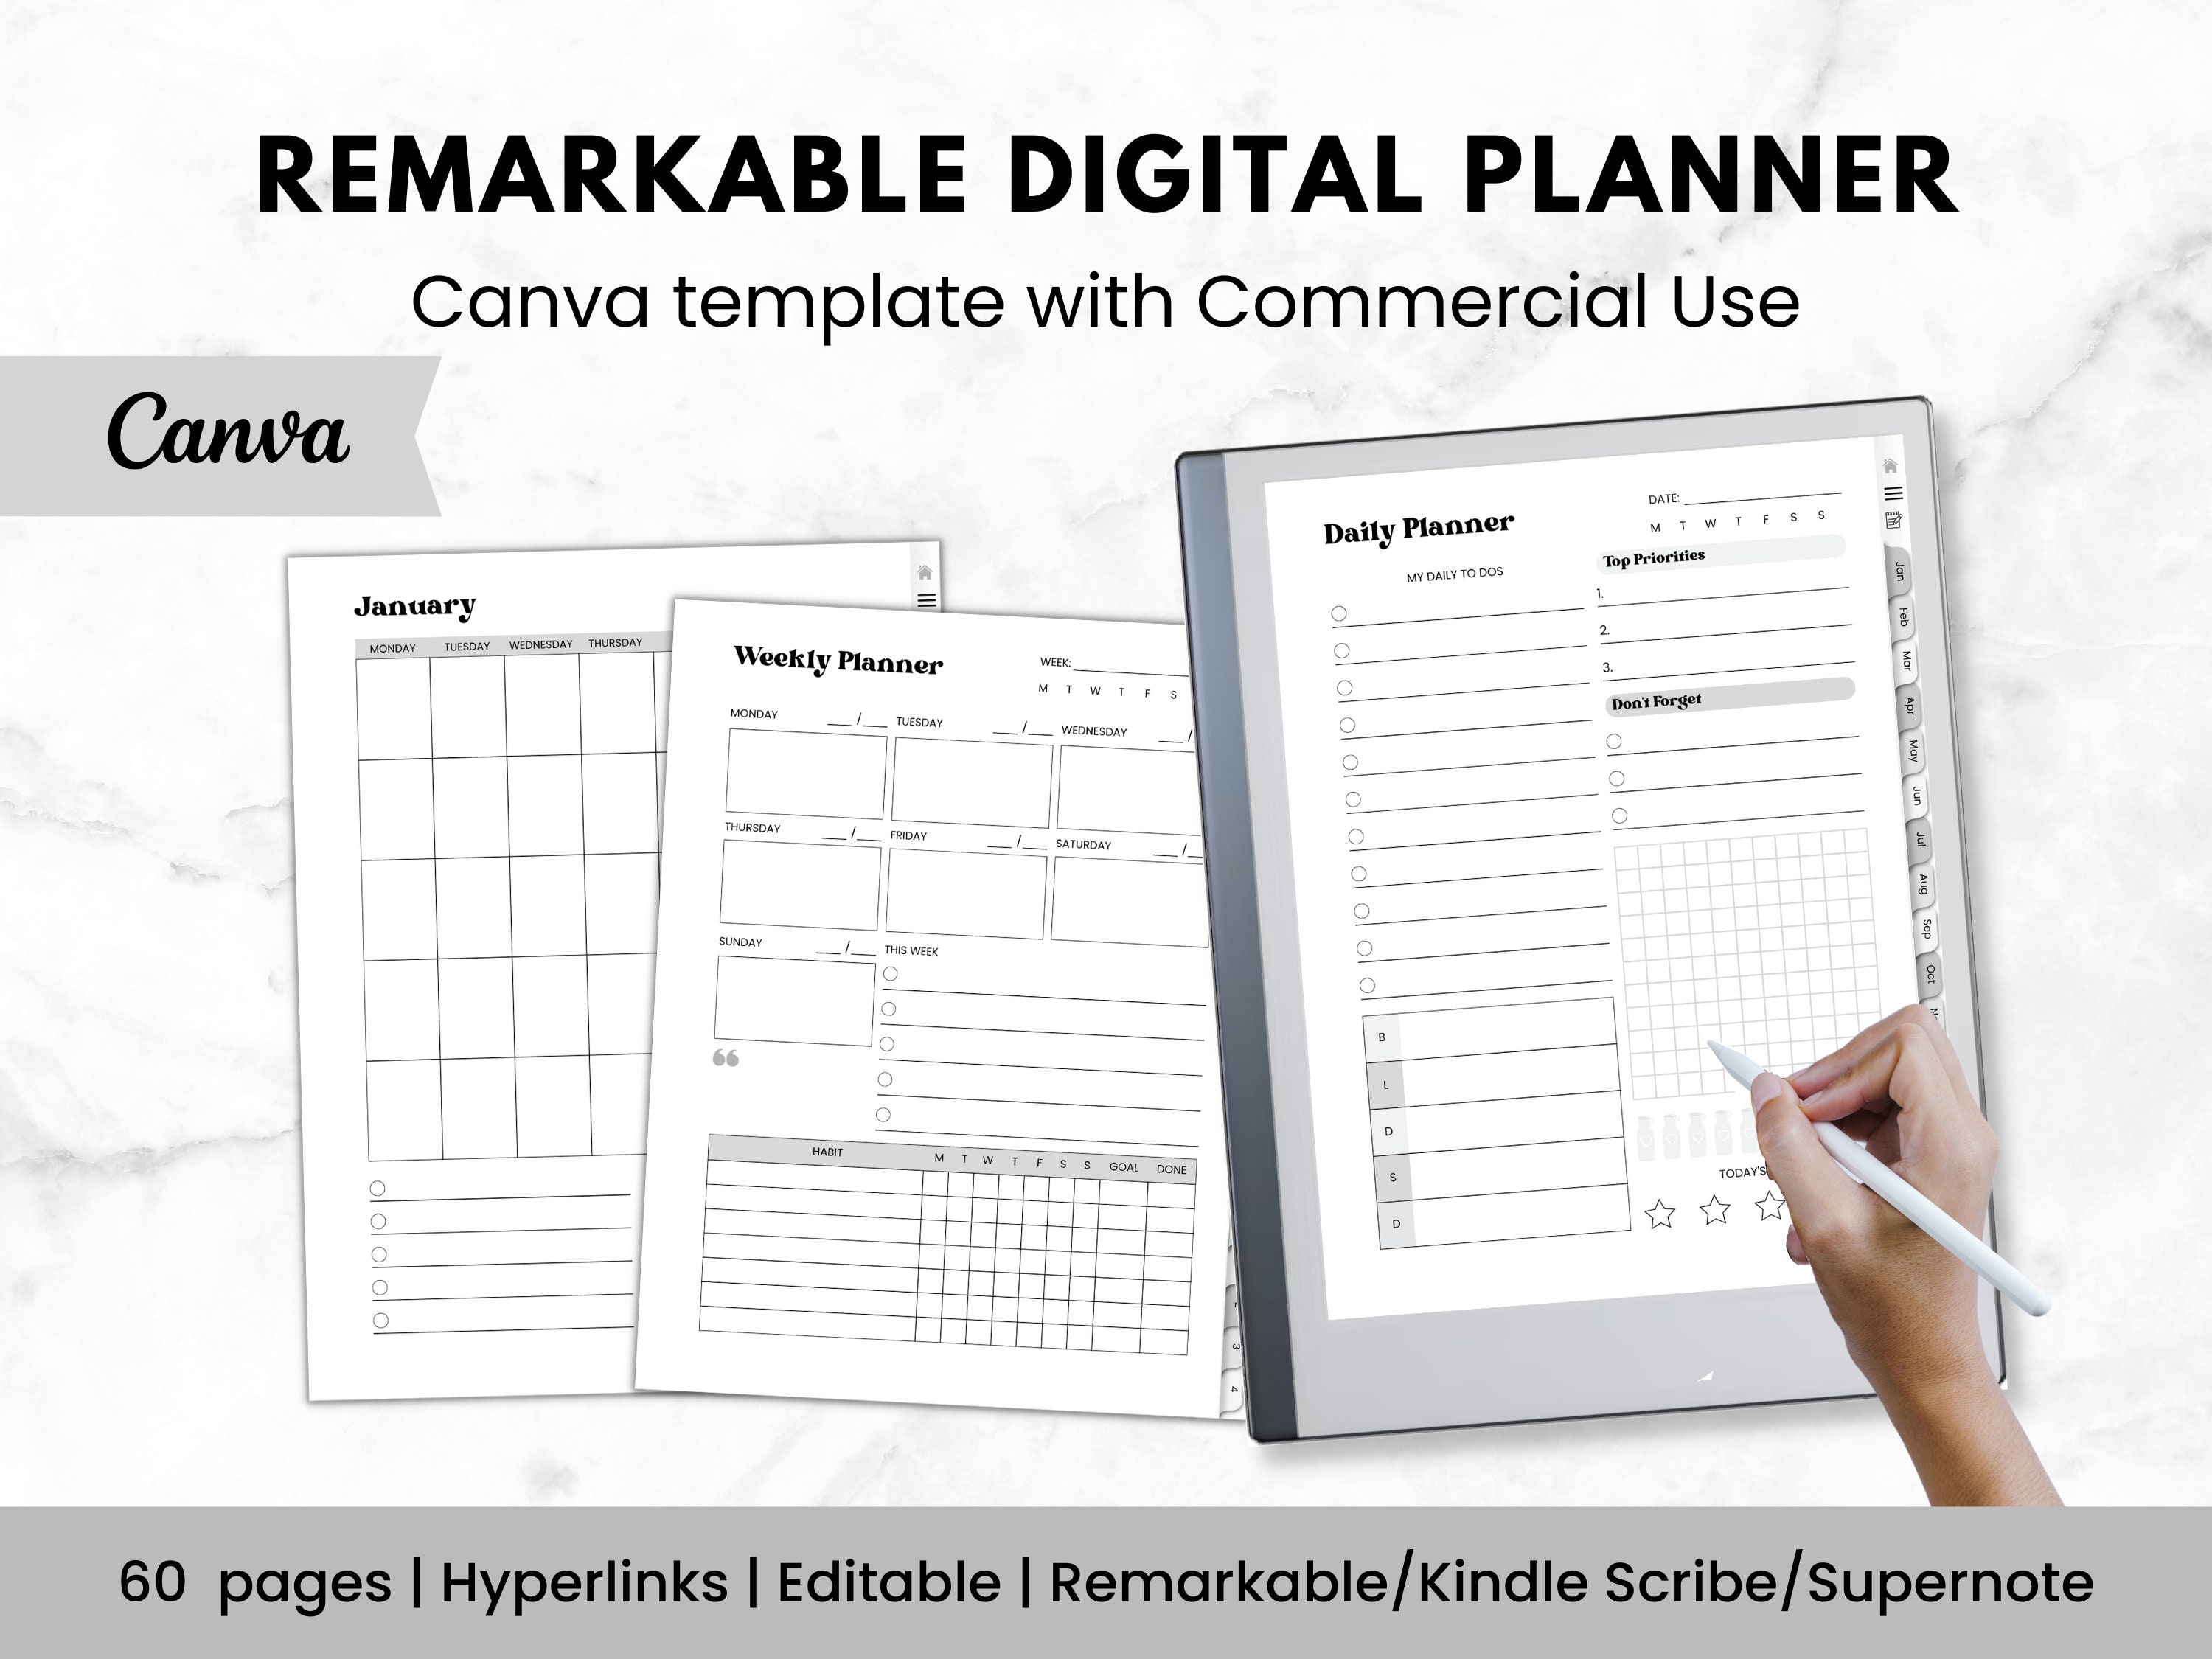 Remarkable 2 Digital Planner Template, Remarkable Canva Template